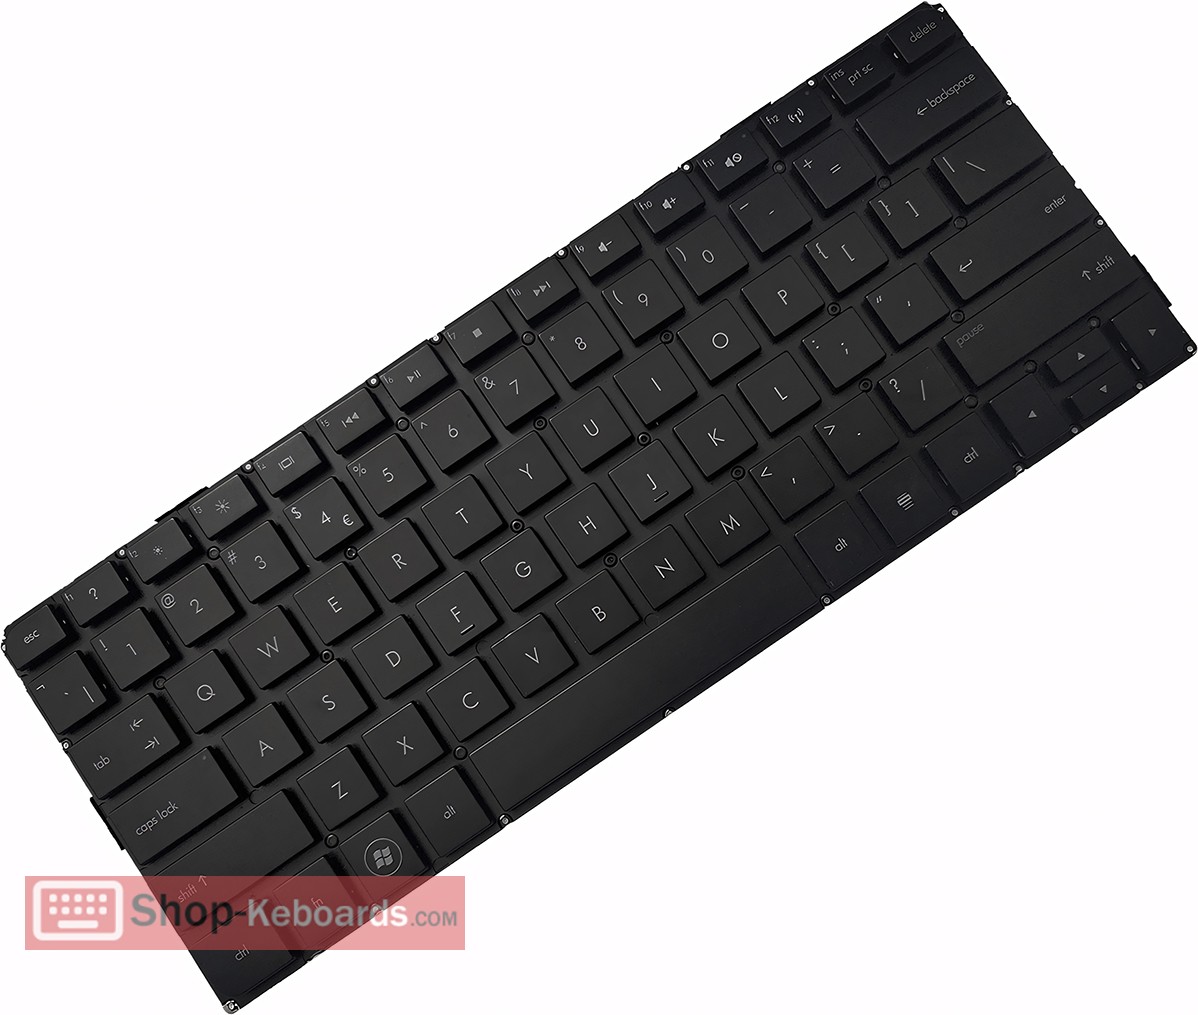 HP ENVY 13-1050ES  Keyboard replacement